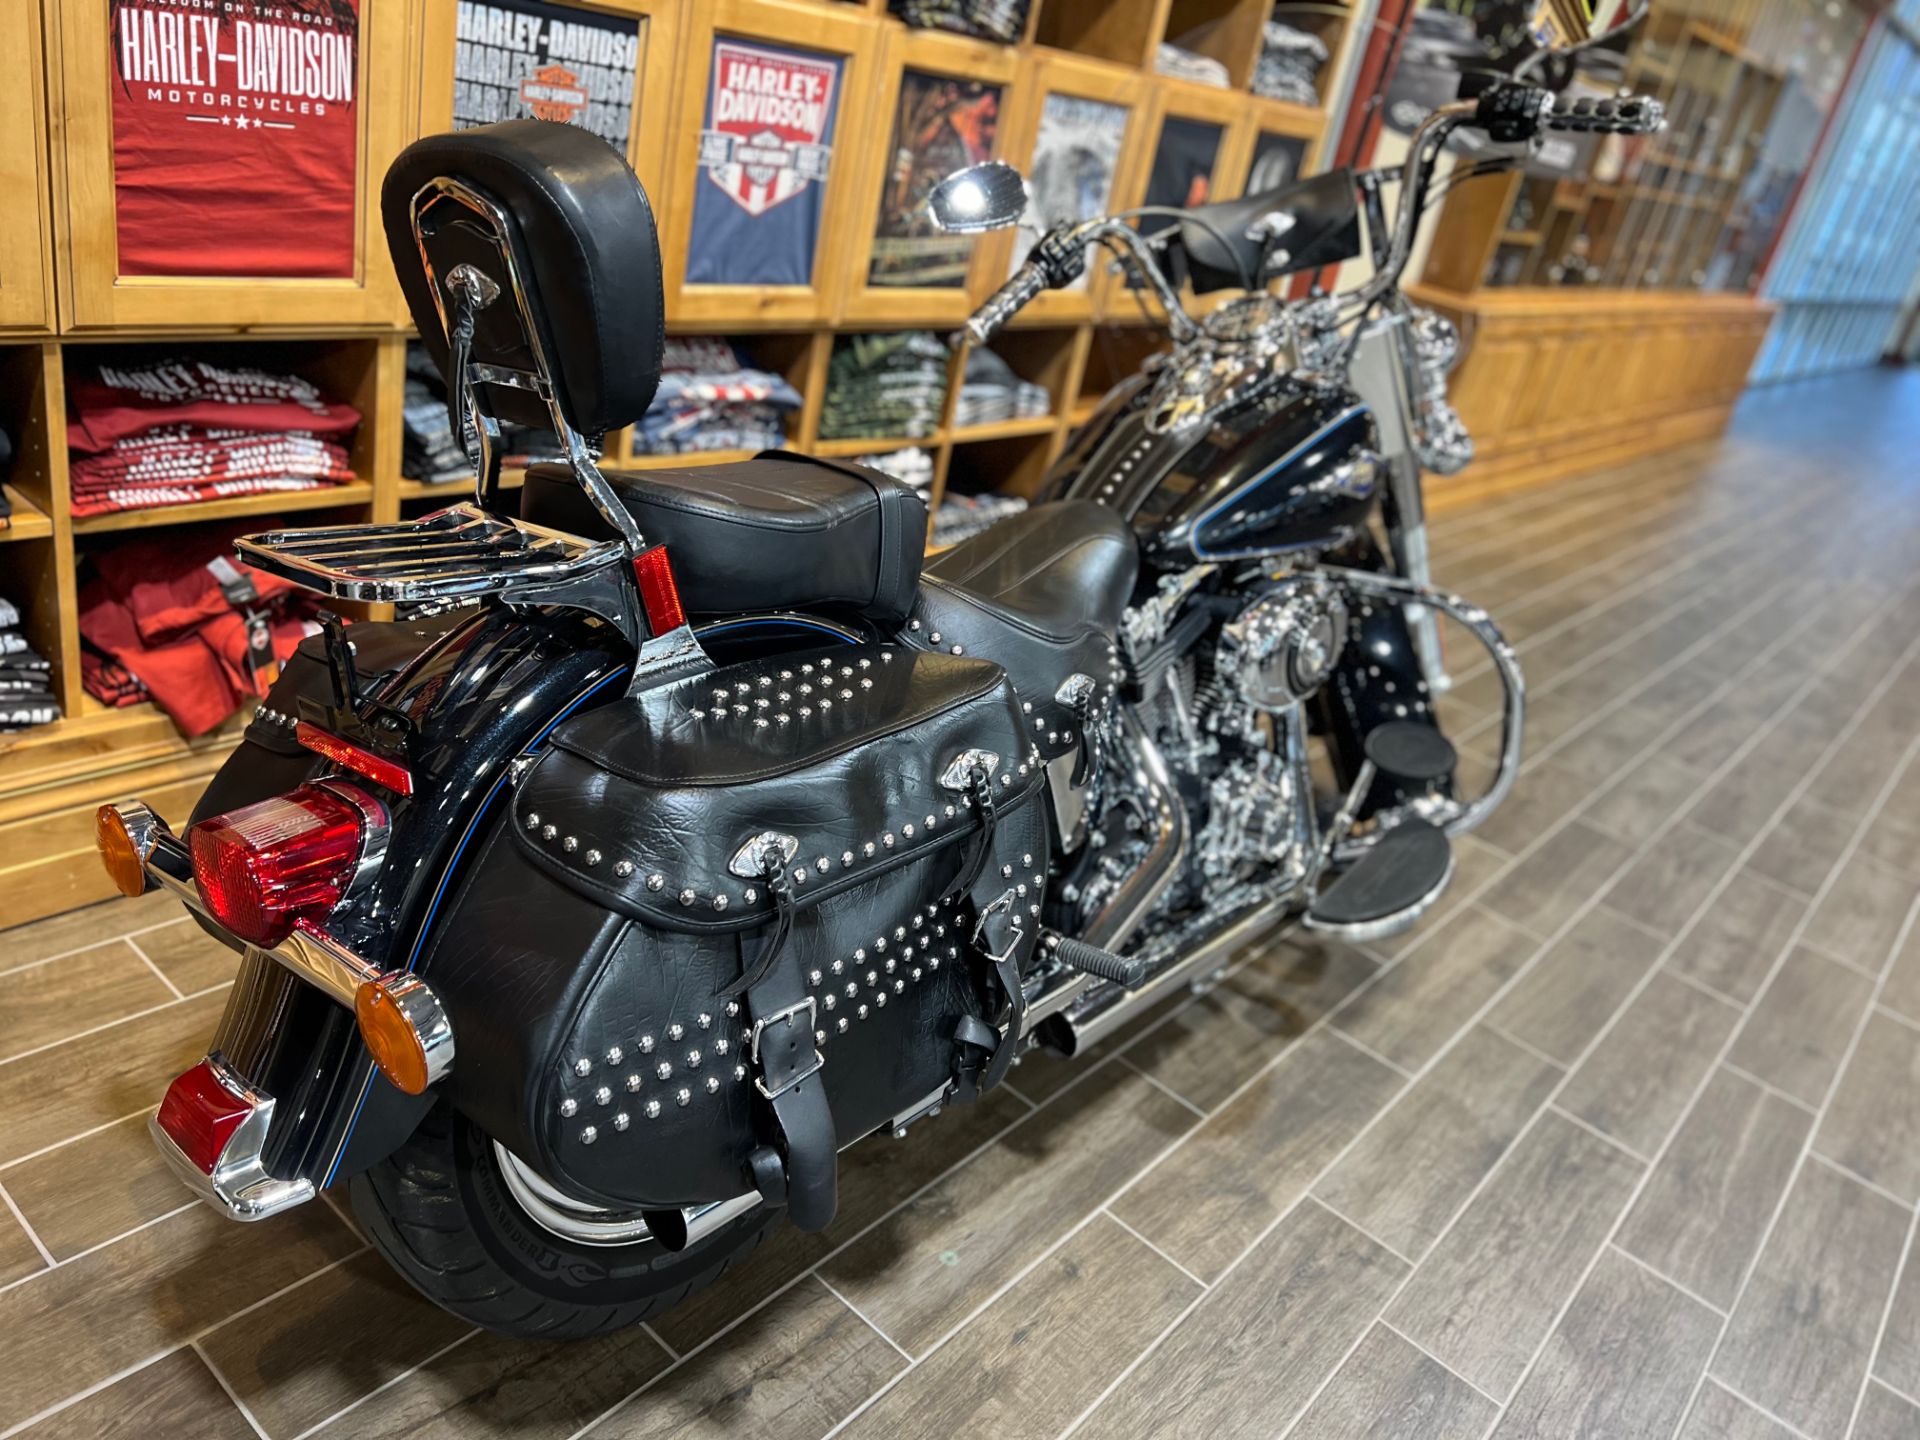 2014 Harley-Davidson Heritage Softail® Classic in Logan, Utah - Photo 3